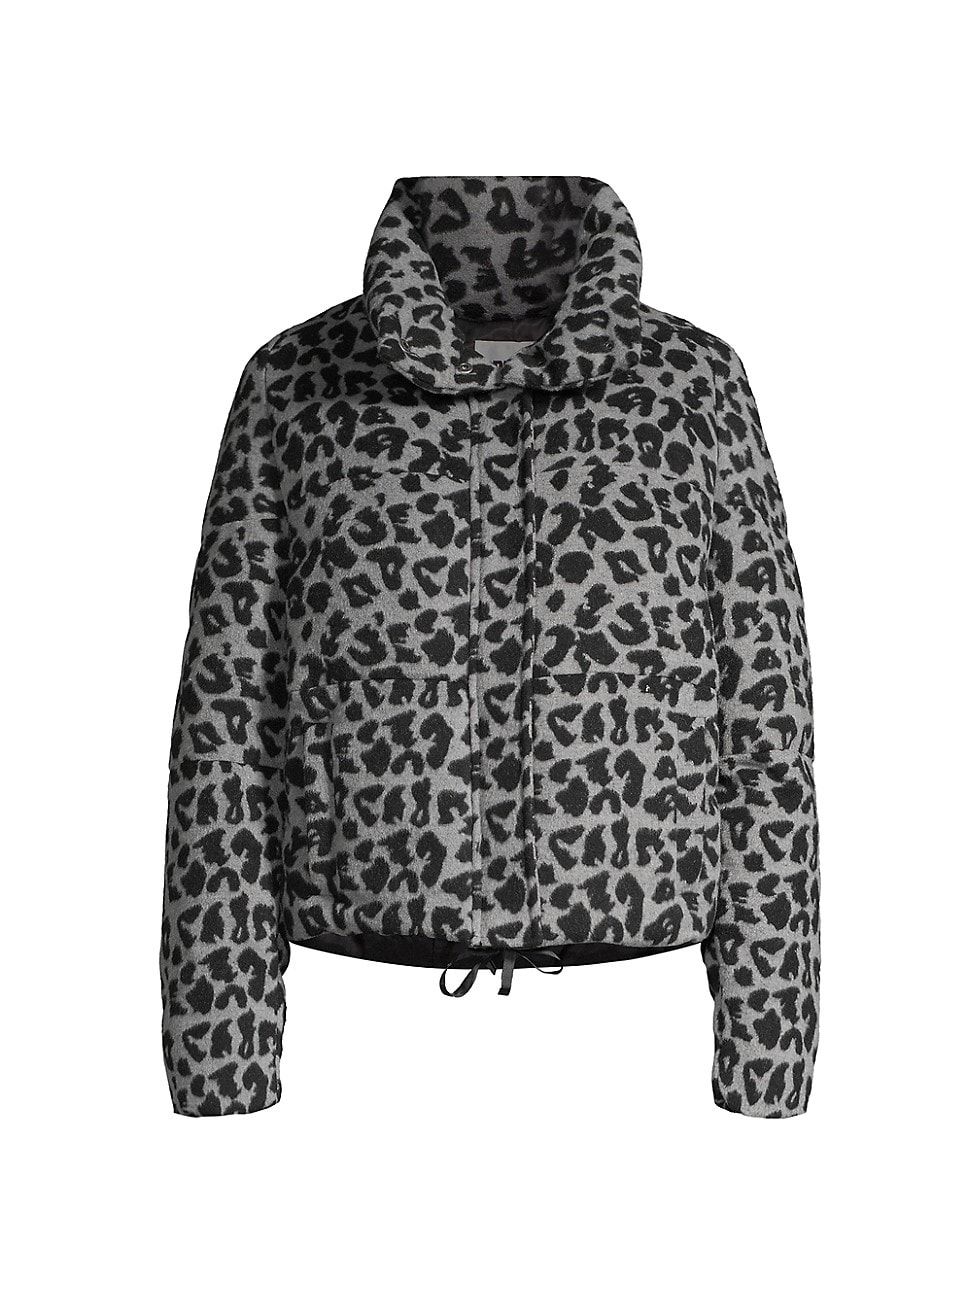 Apparis Women's Chris Leopard-Print Puffer Jacket - Noir Ash Grey - Size Medium | Saks Fifth Avenue